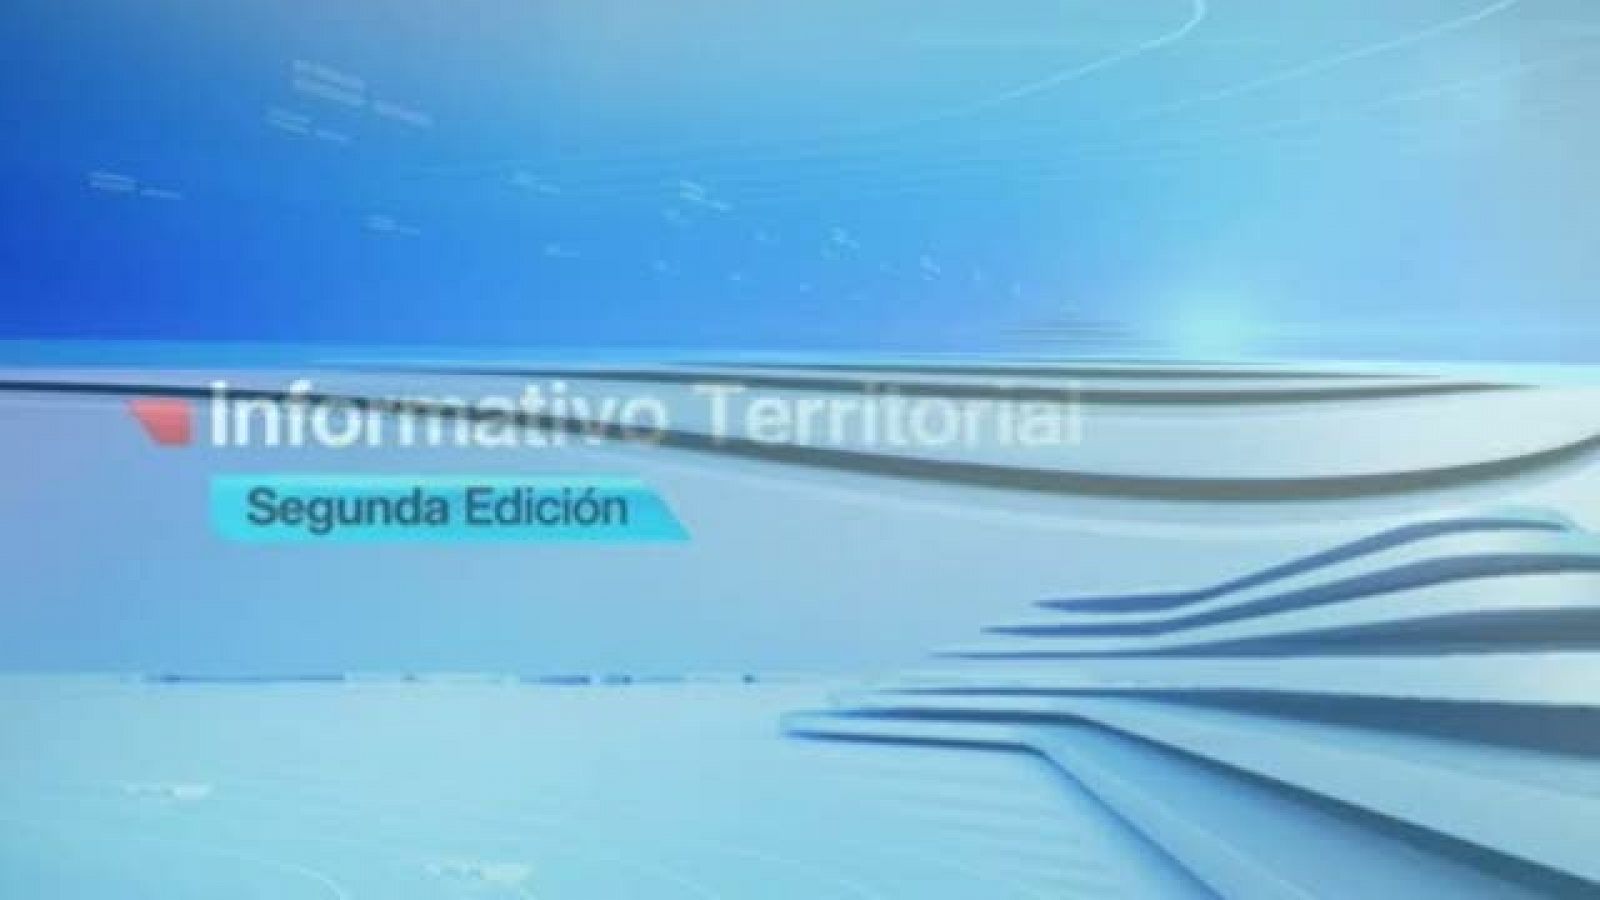 Noticias de Extremadura: Noticias de Extremadura 2 - 27/06/2017 | RTVE Play